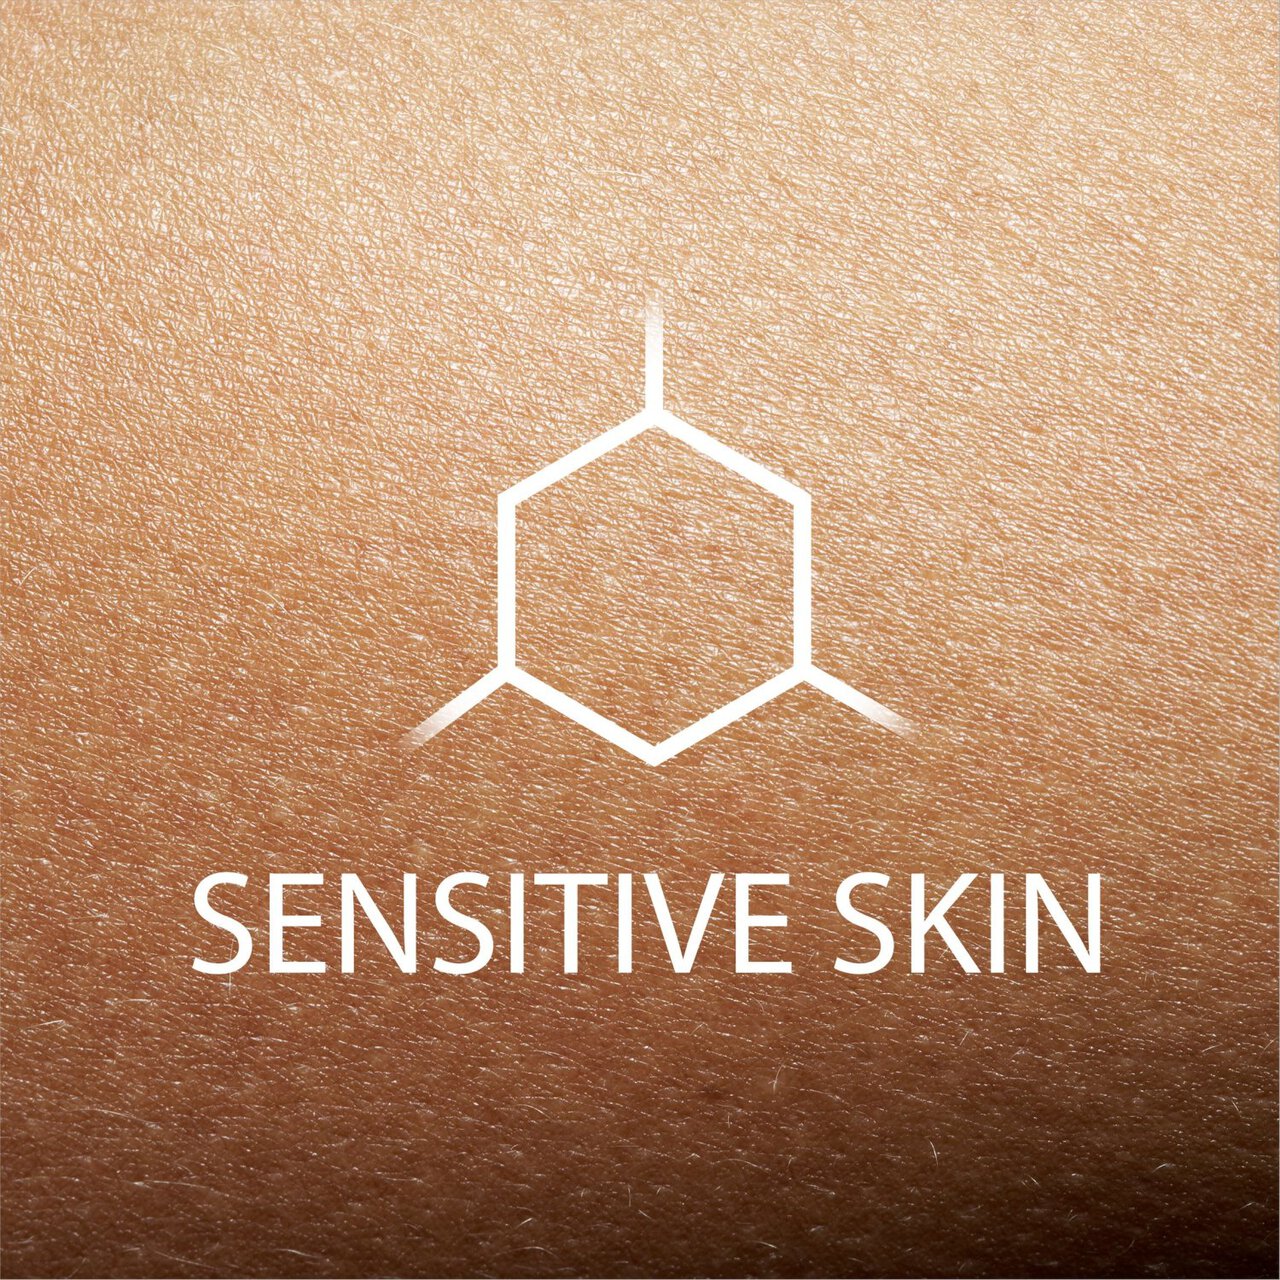 Sanex Zero % Sensitive Skin Shower Gel 225ml